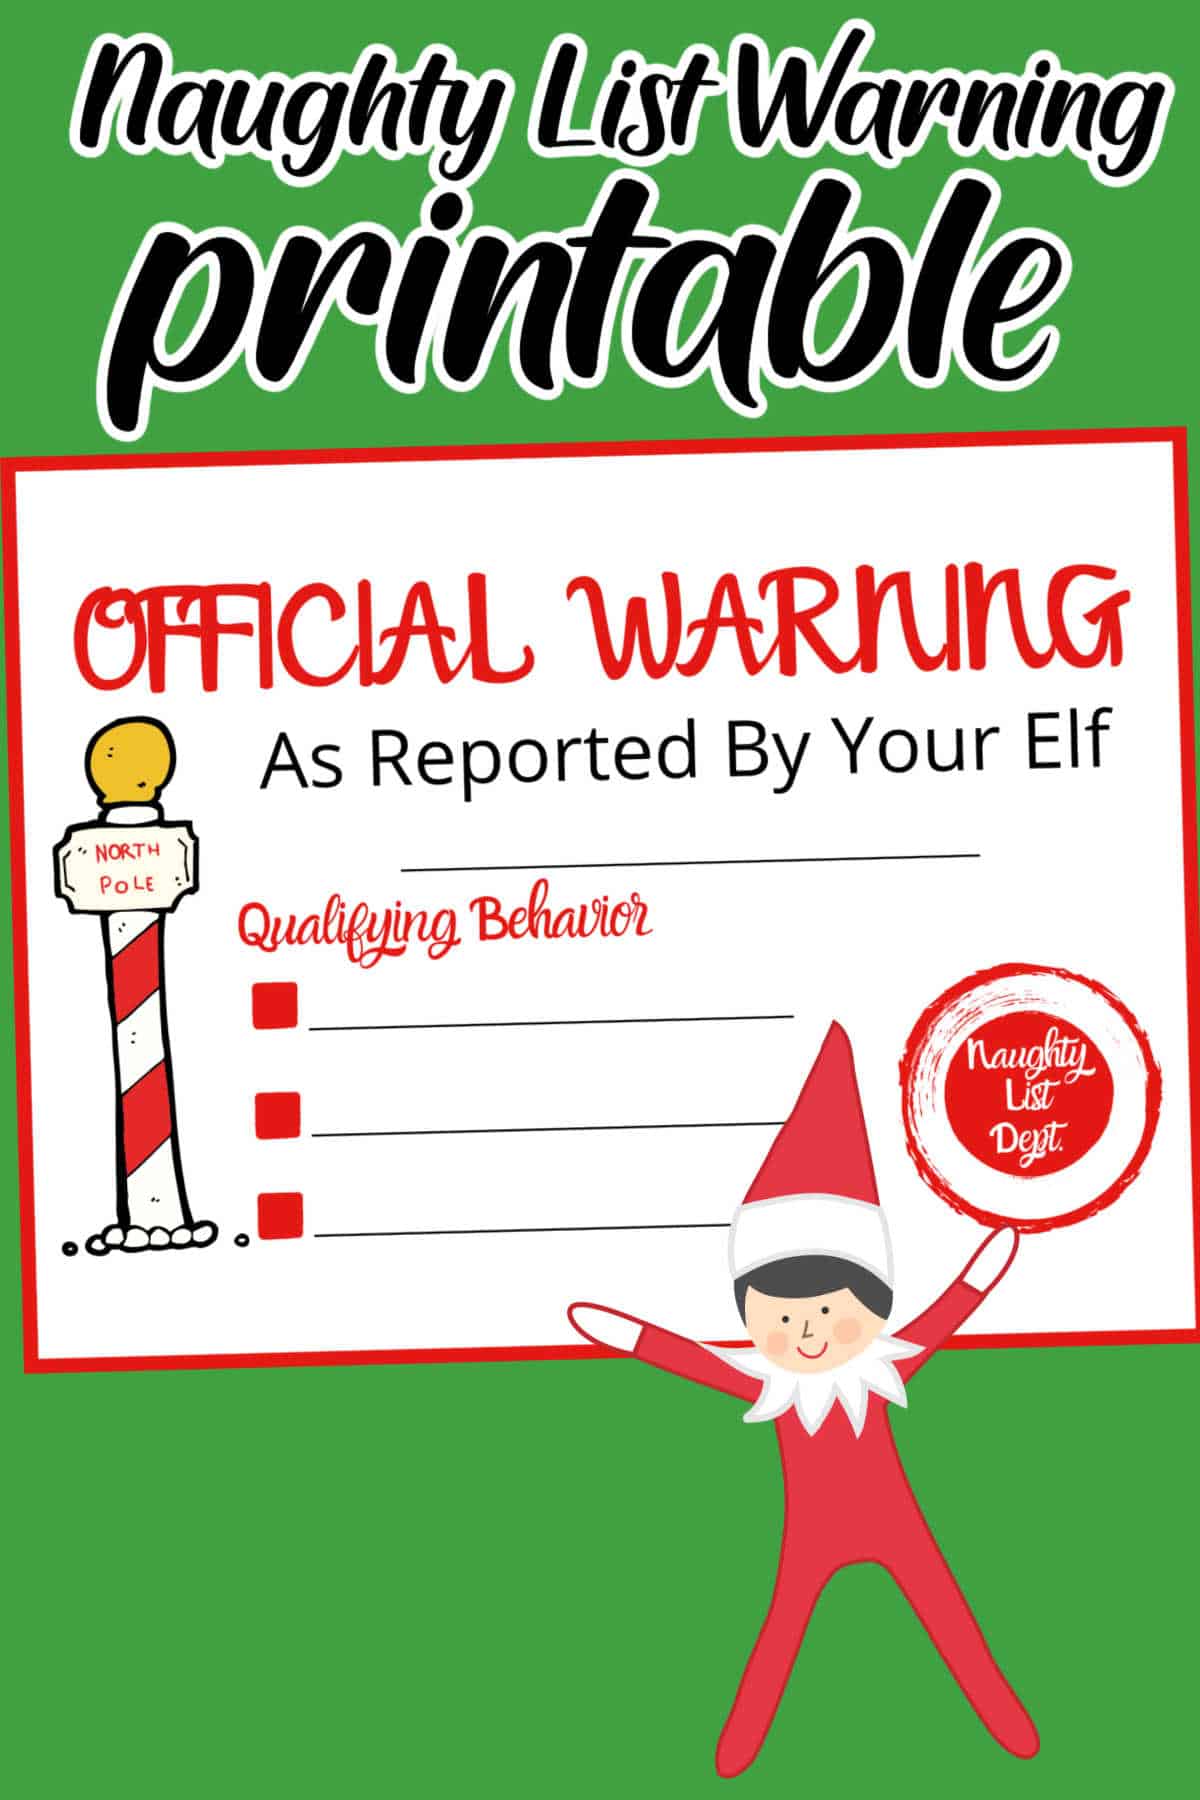 Elf on the Shelf Naughty List Warning Printable